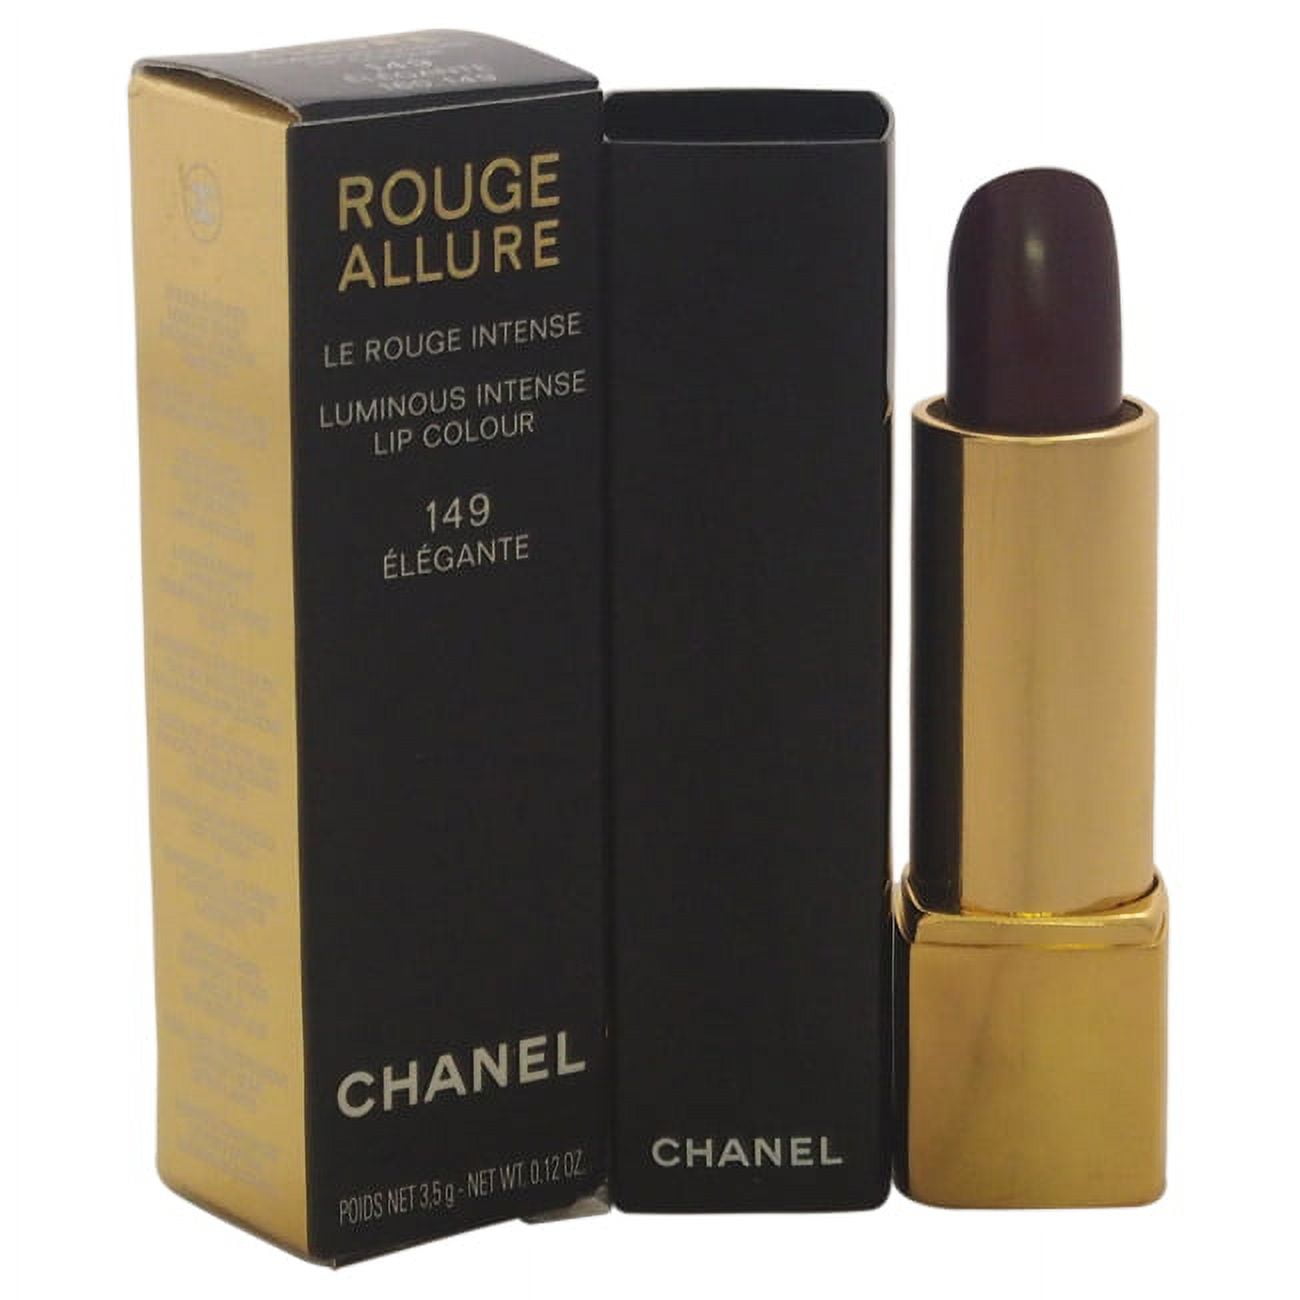 Rouge Allure Luminous Intense Lip Colour - # 149 Elegante by Chanel for  Women - 0.12 oz Lipstick